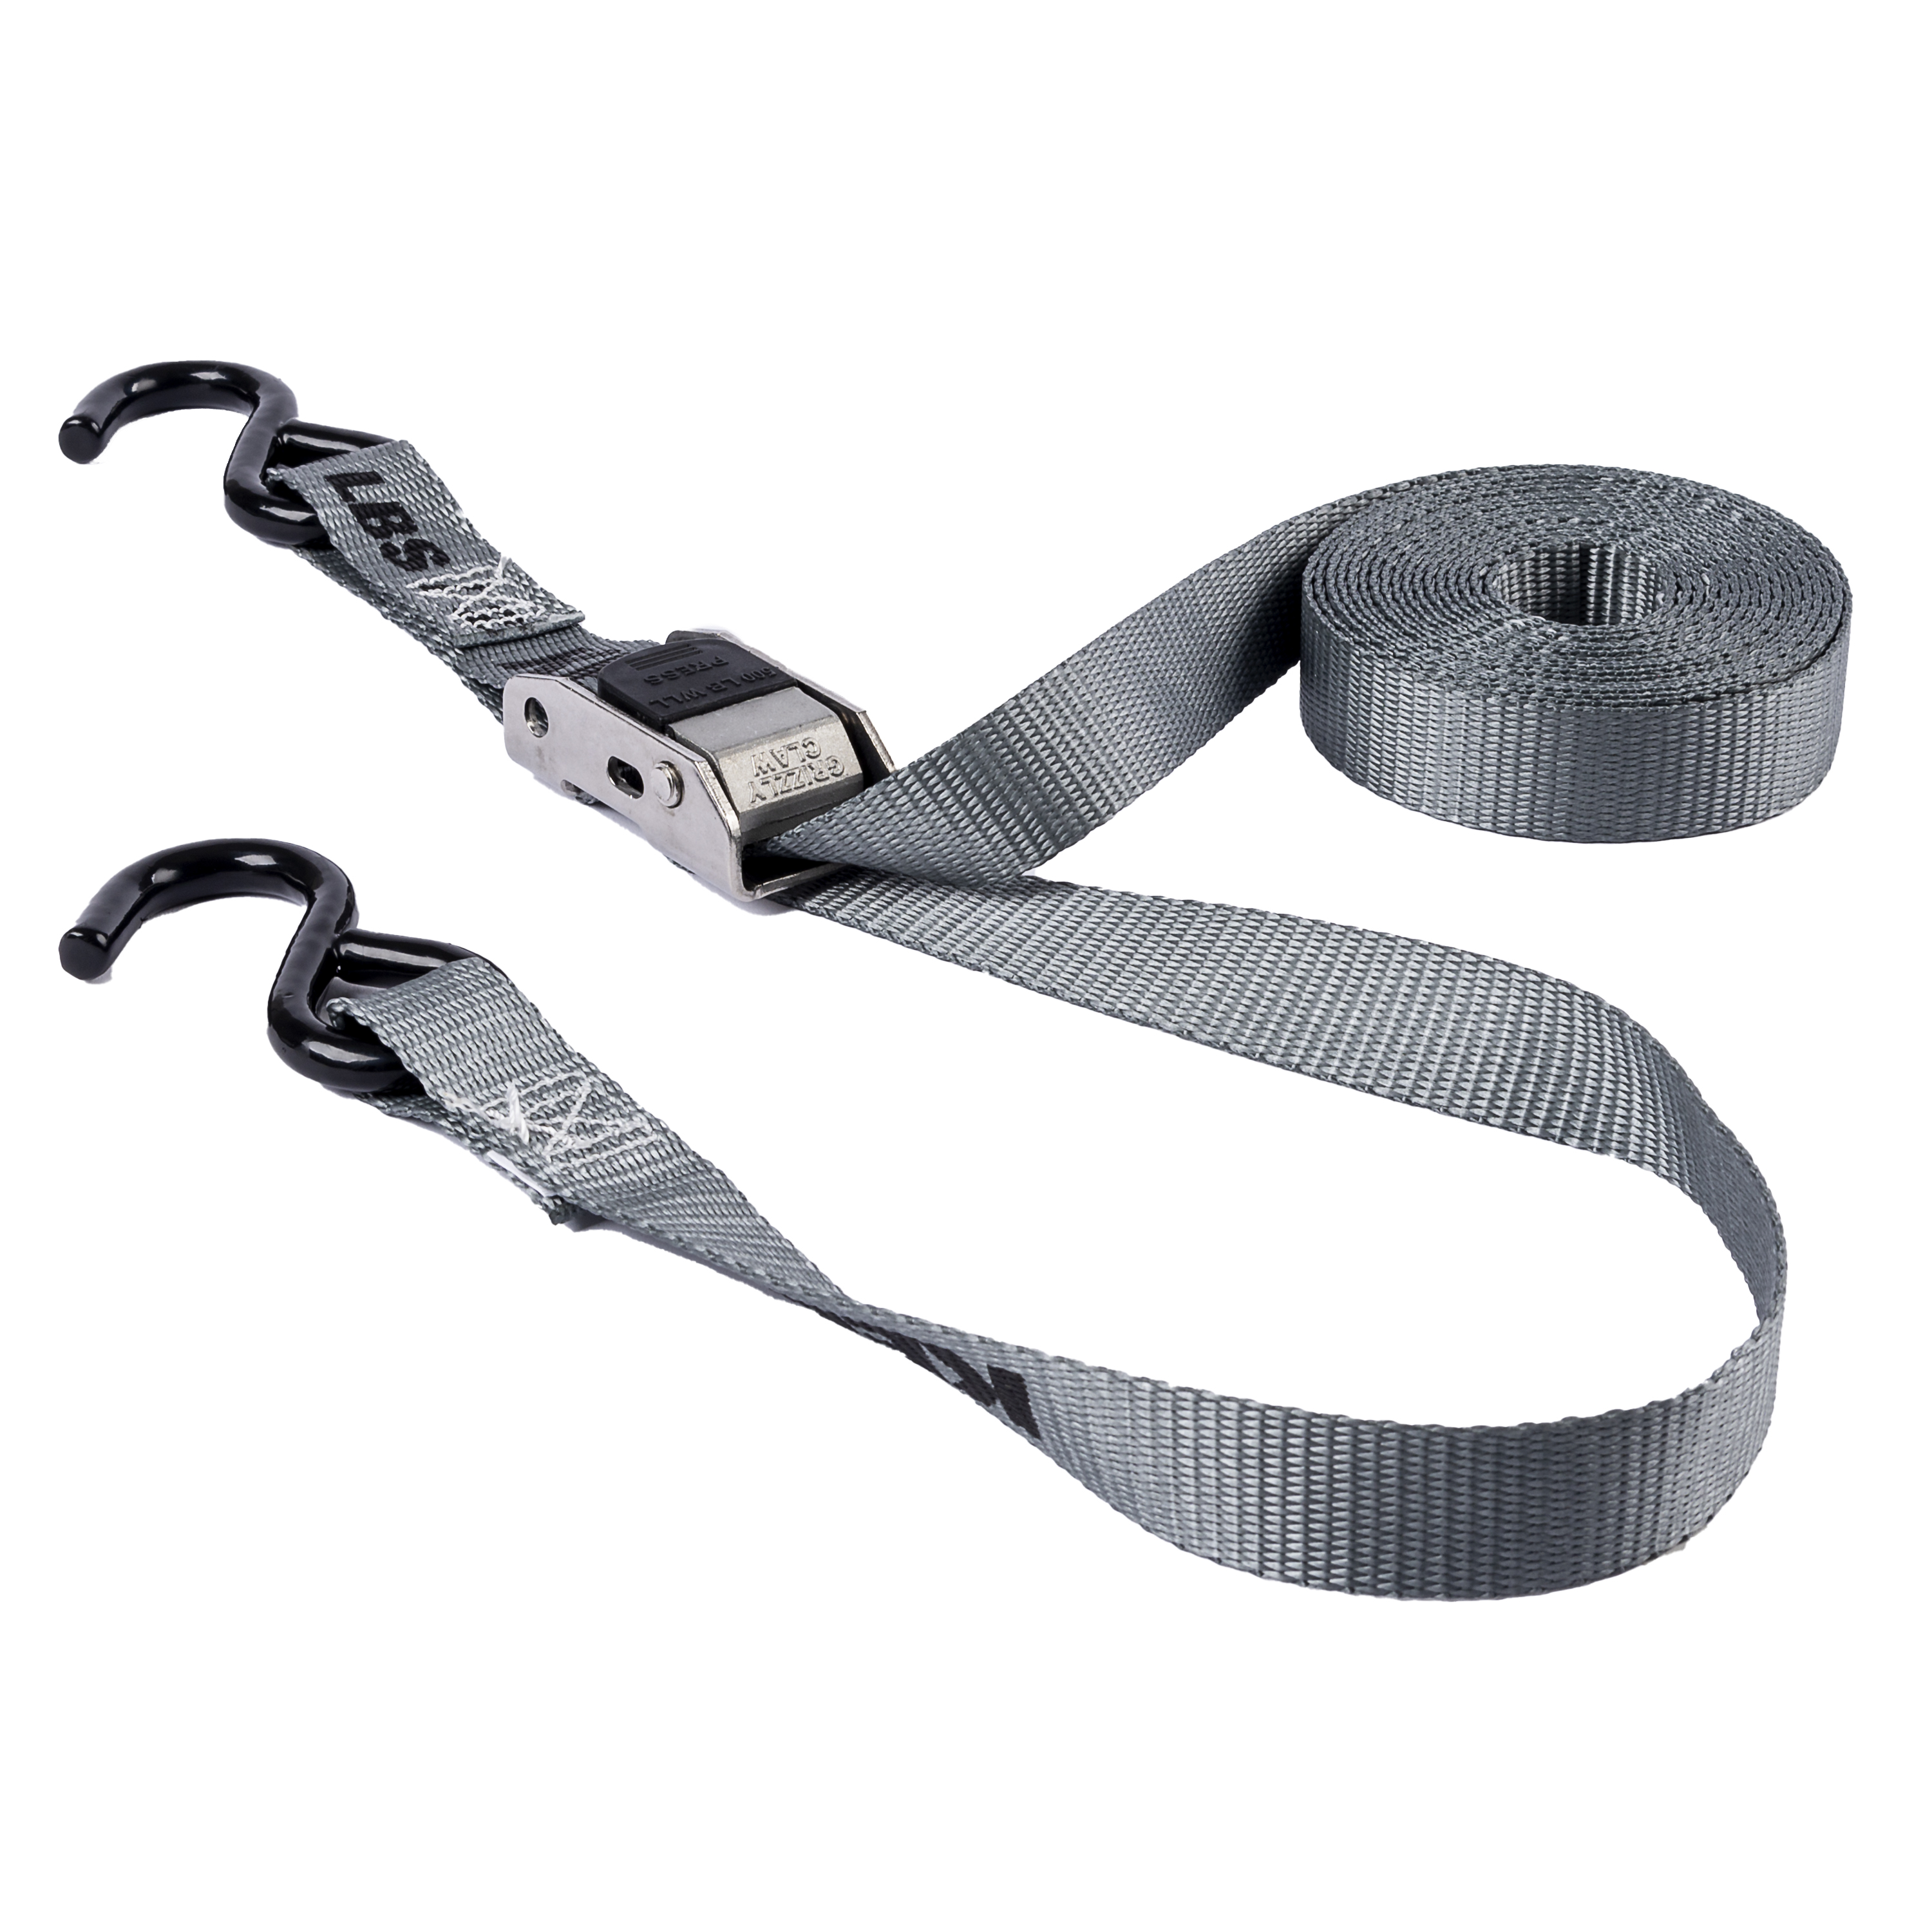 1 x 14' Stainless Steel Cam Buckle Tie-Down, 500 lbs. WLL